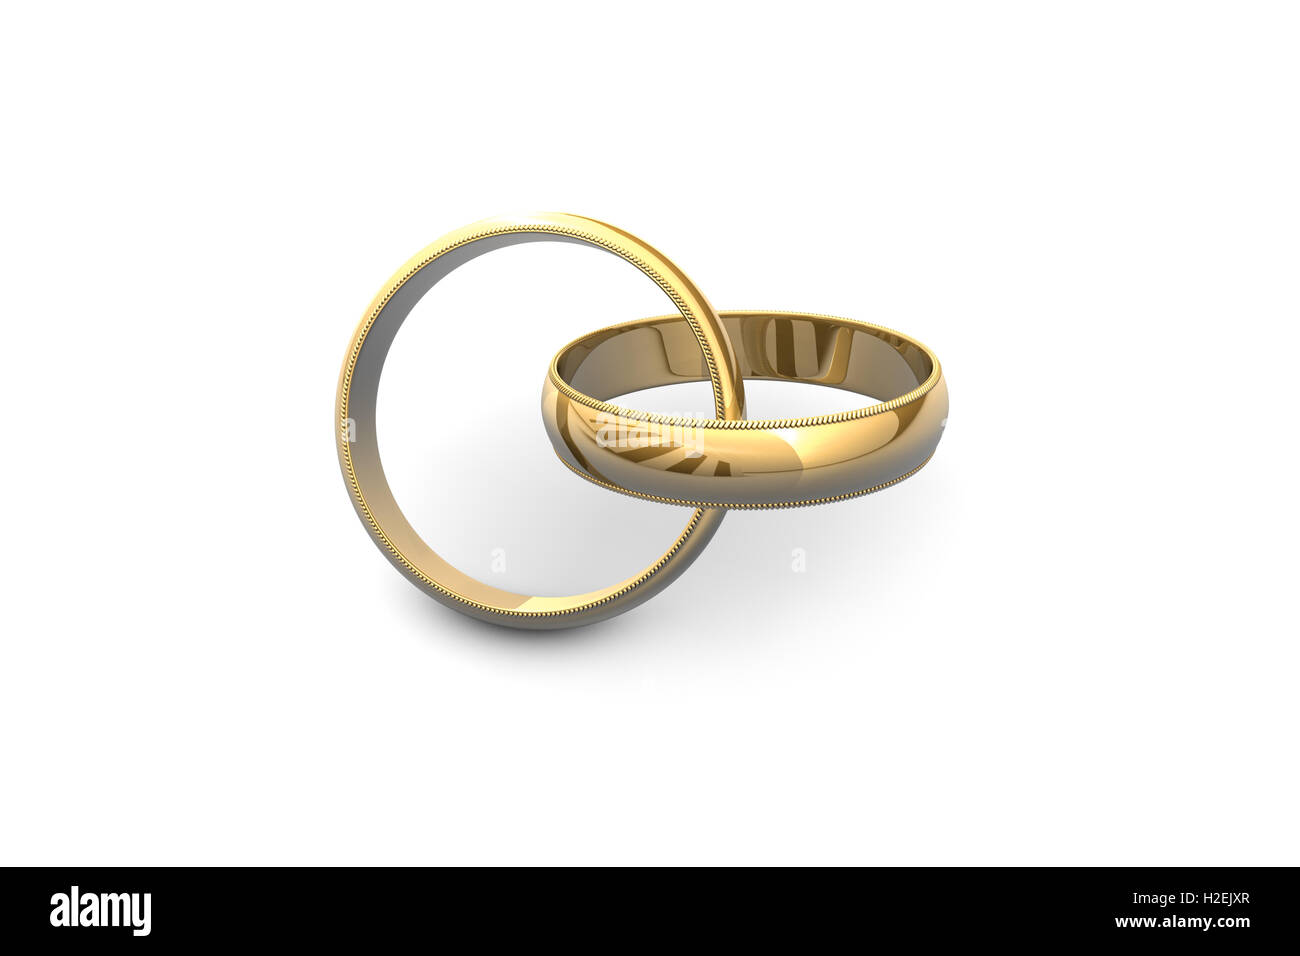 Gold wedding rings isolated on white background. Stock Photo